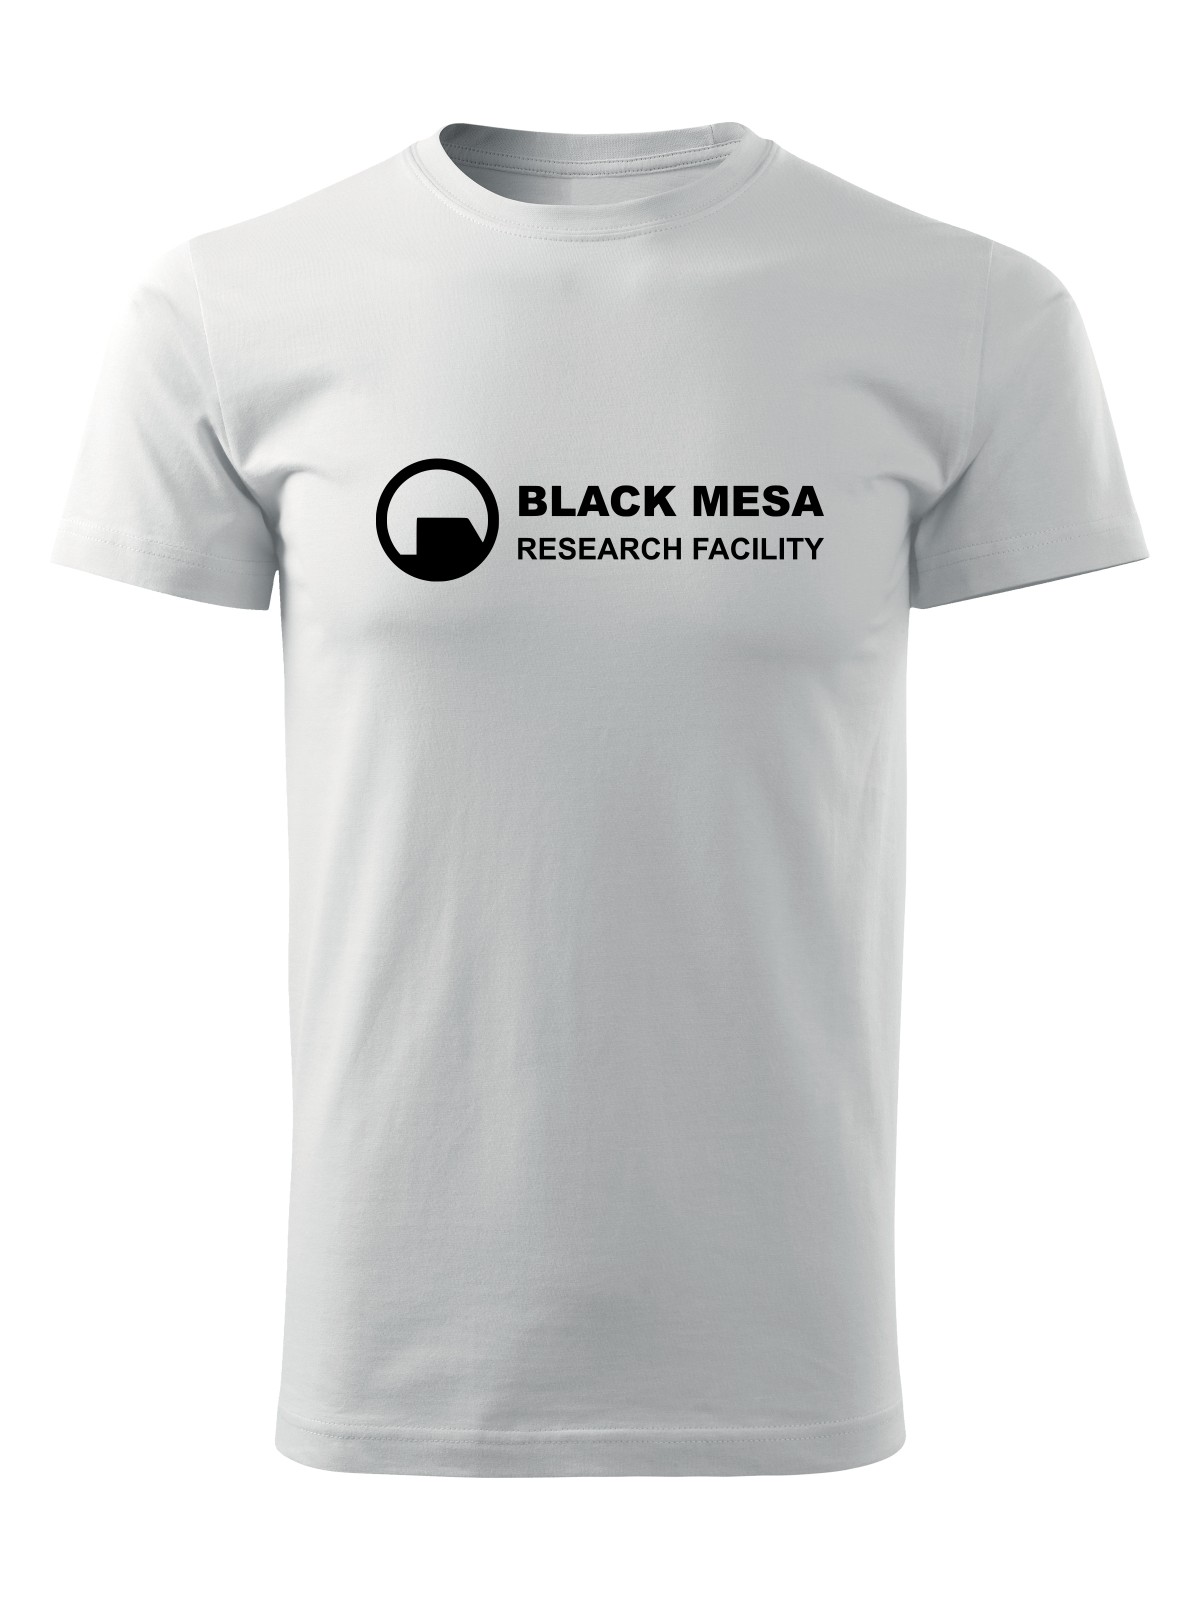 black mesa research facility car decal